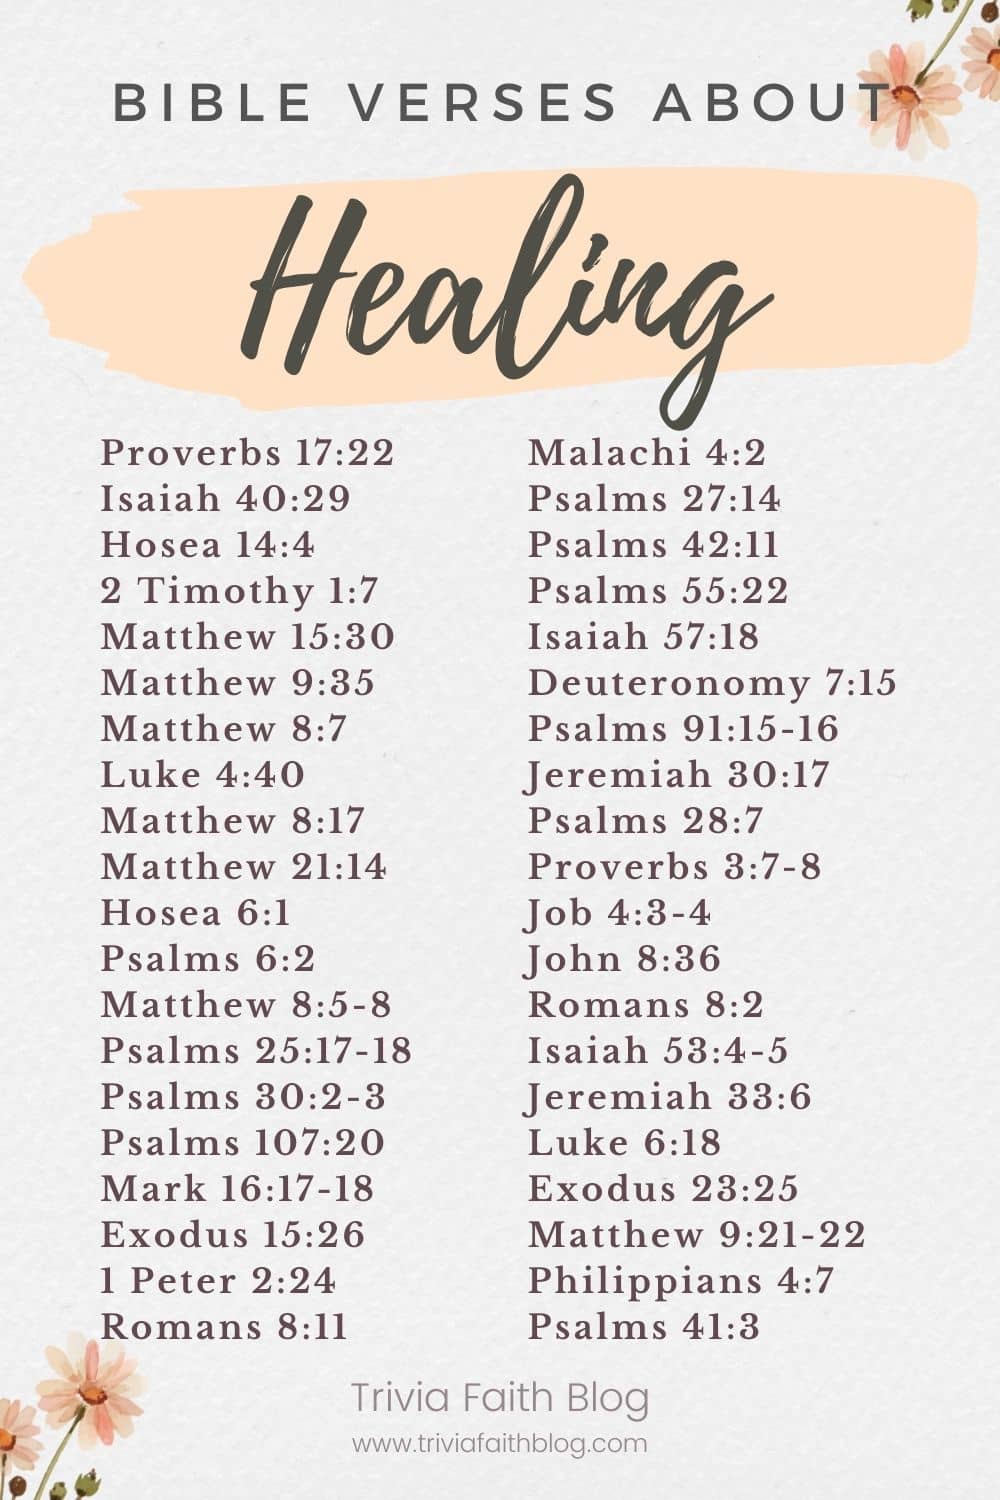 Bible verses about healing